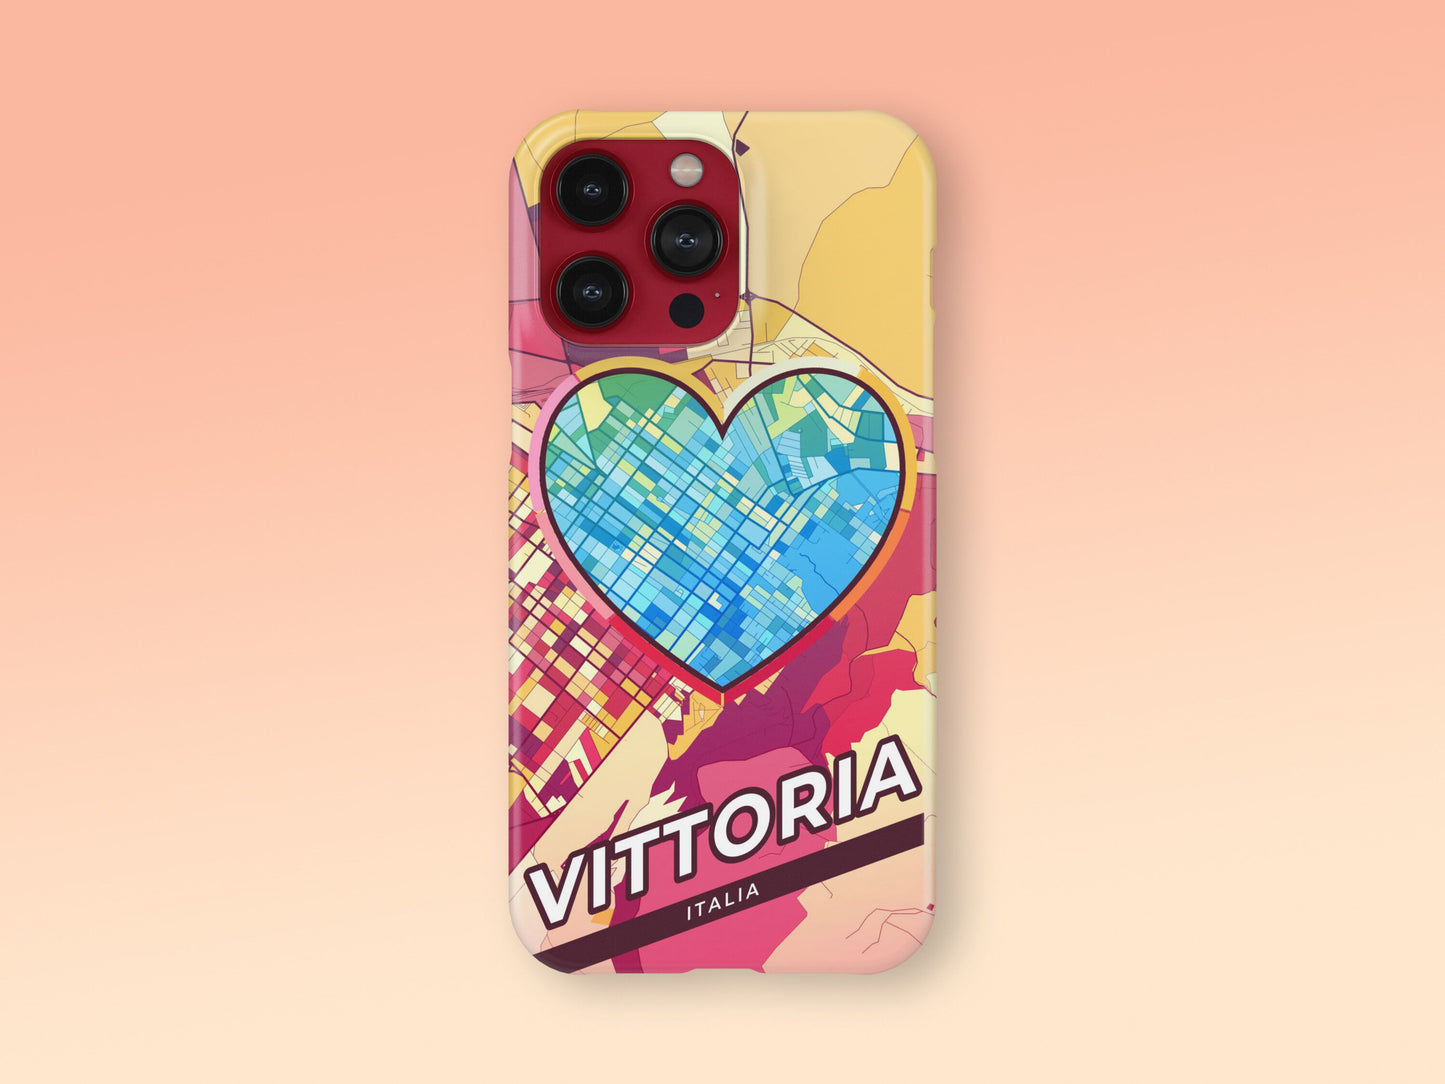 Vittoria Italy slim phone case with colorful icon 2